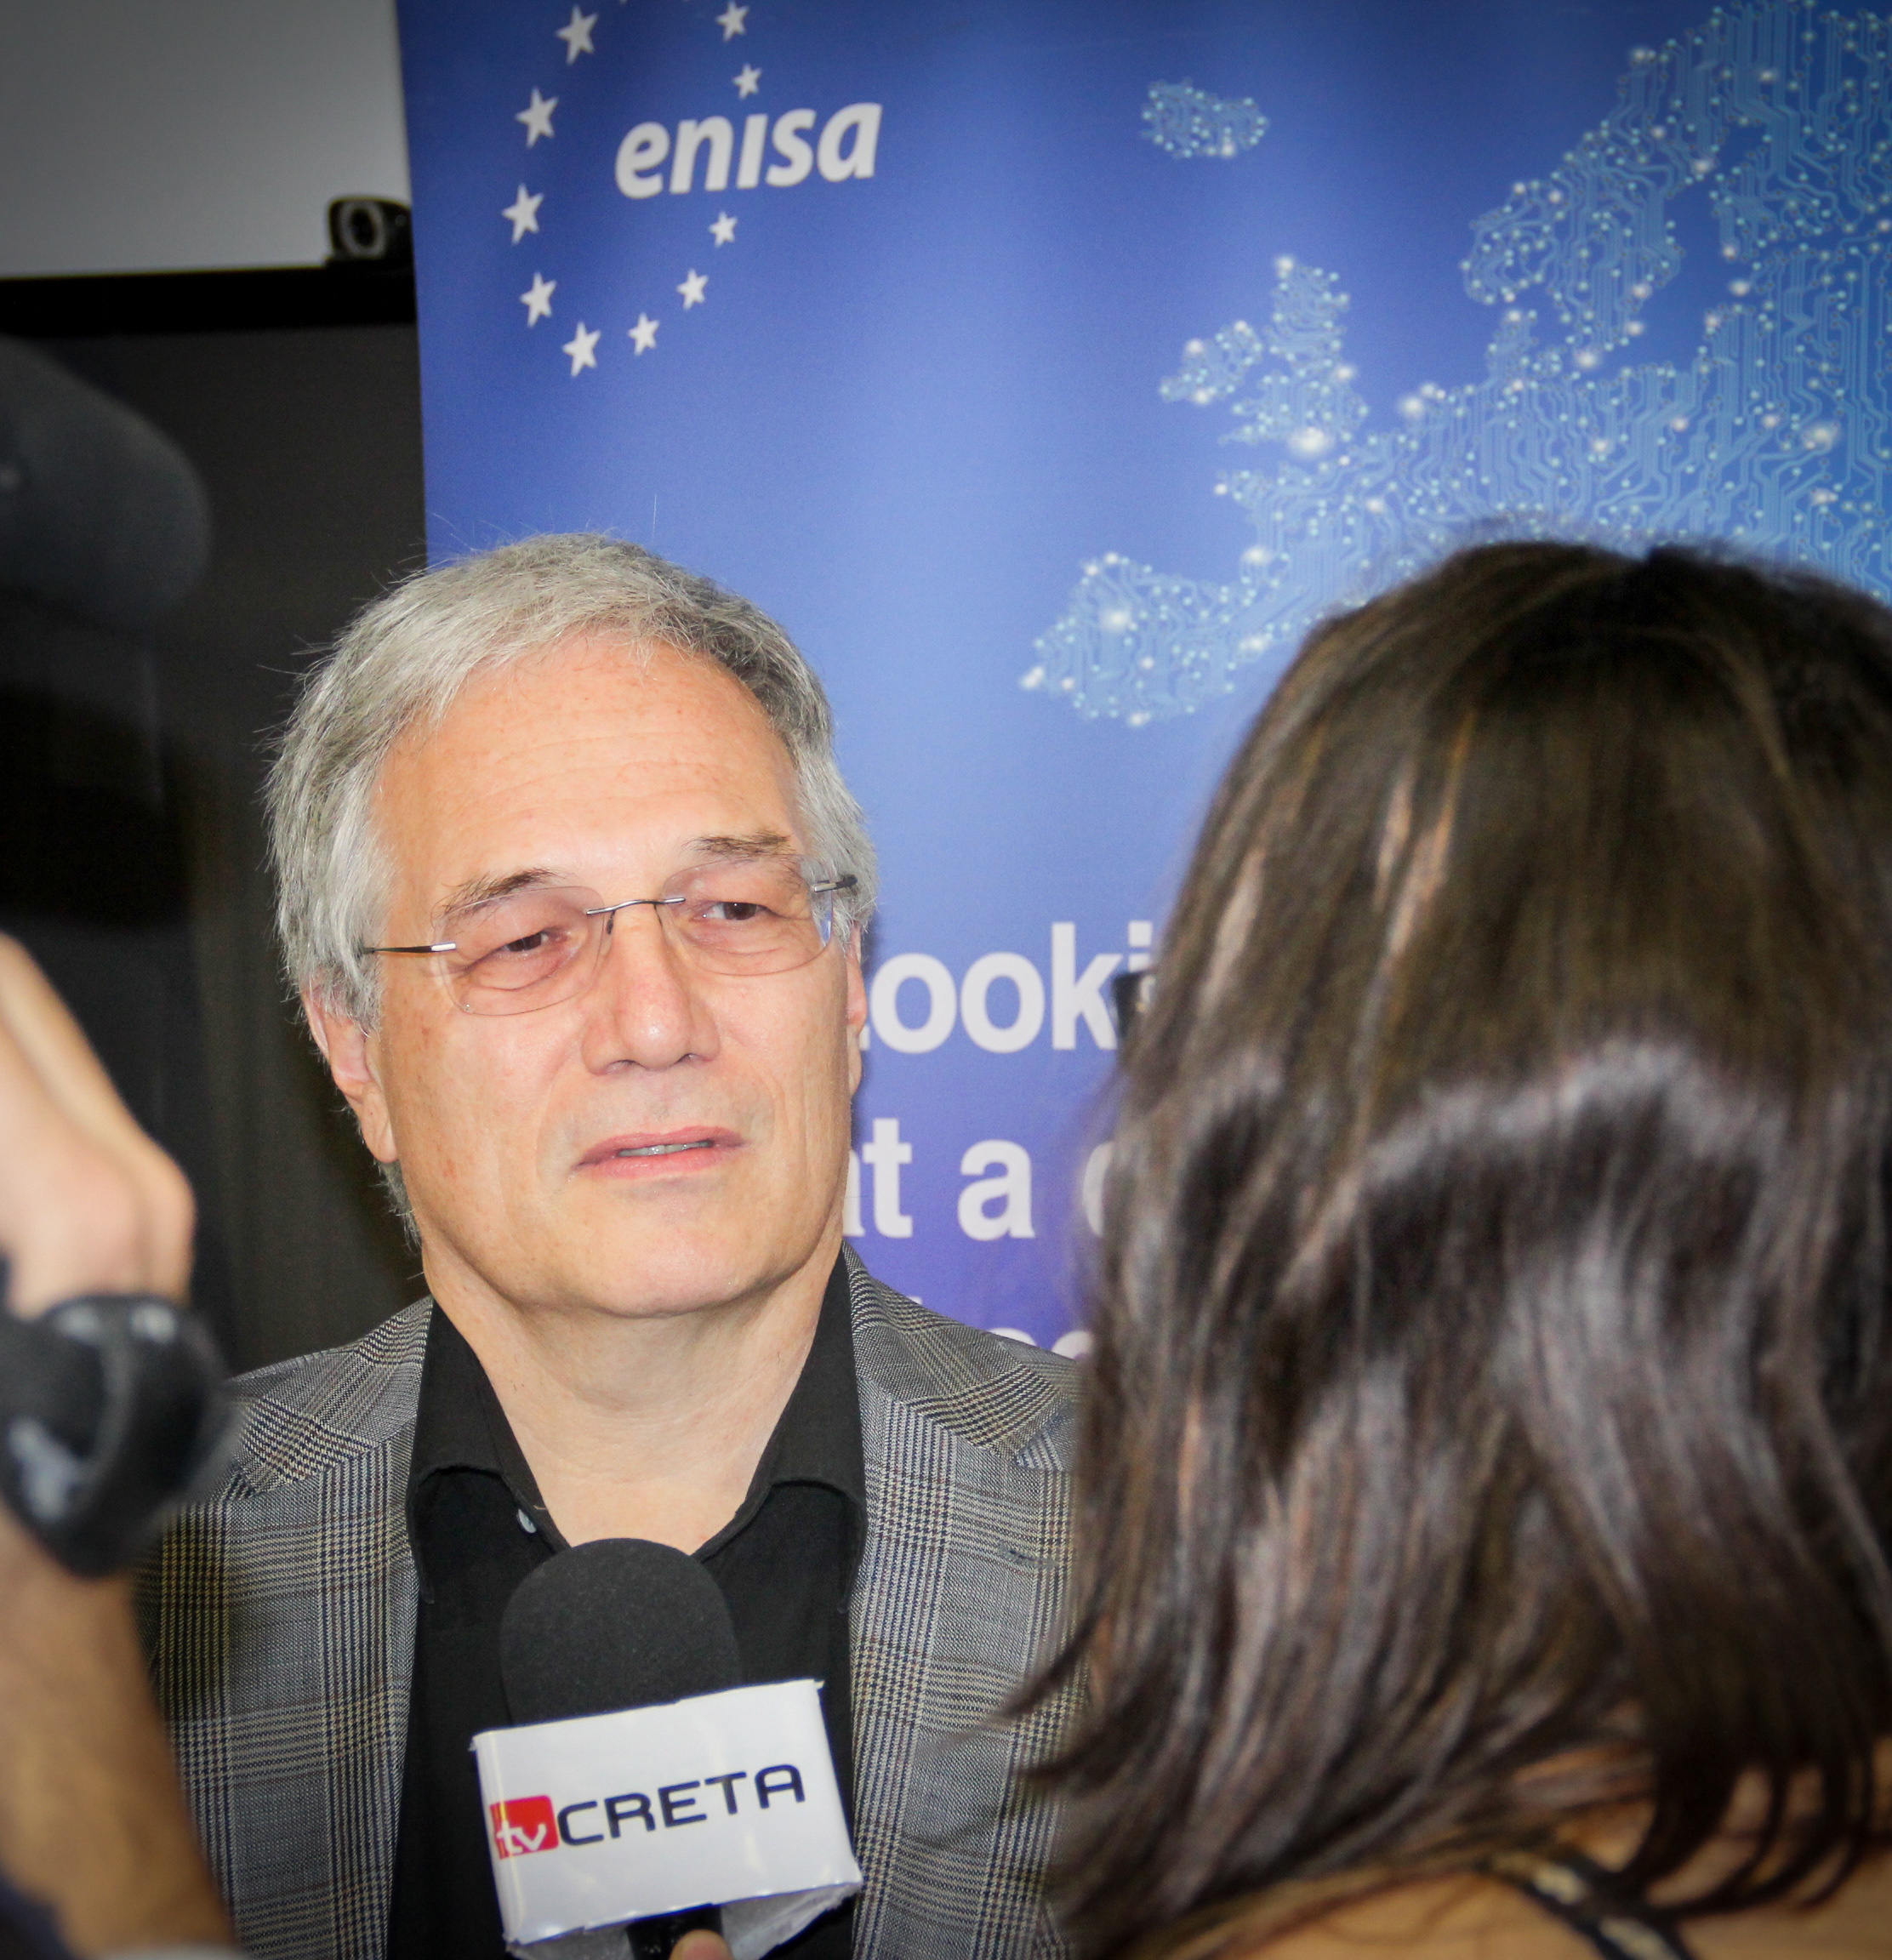 ENISA donates electronic equipment